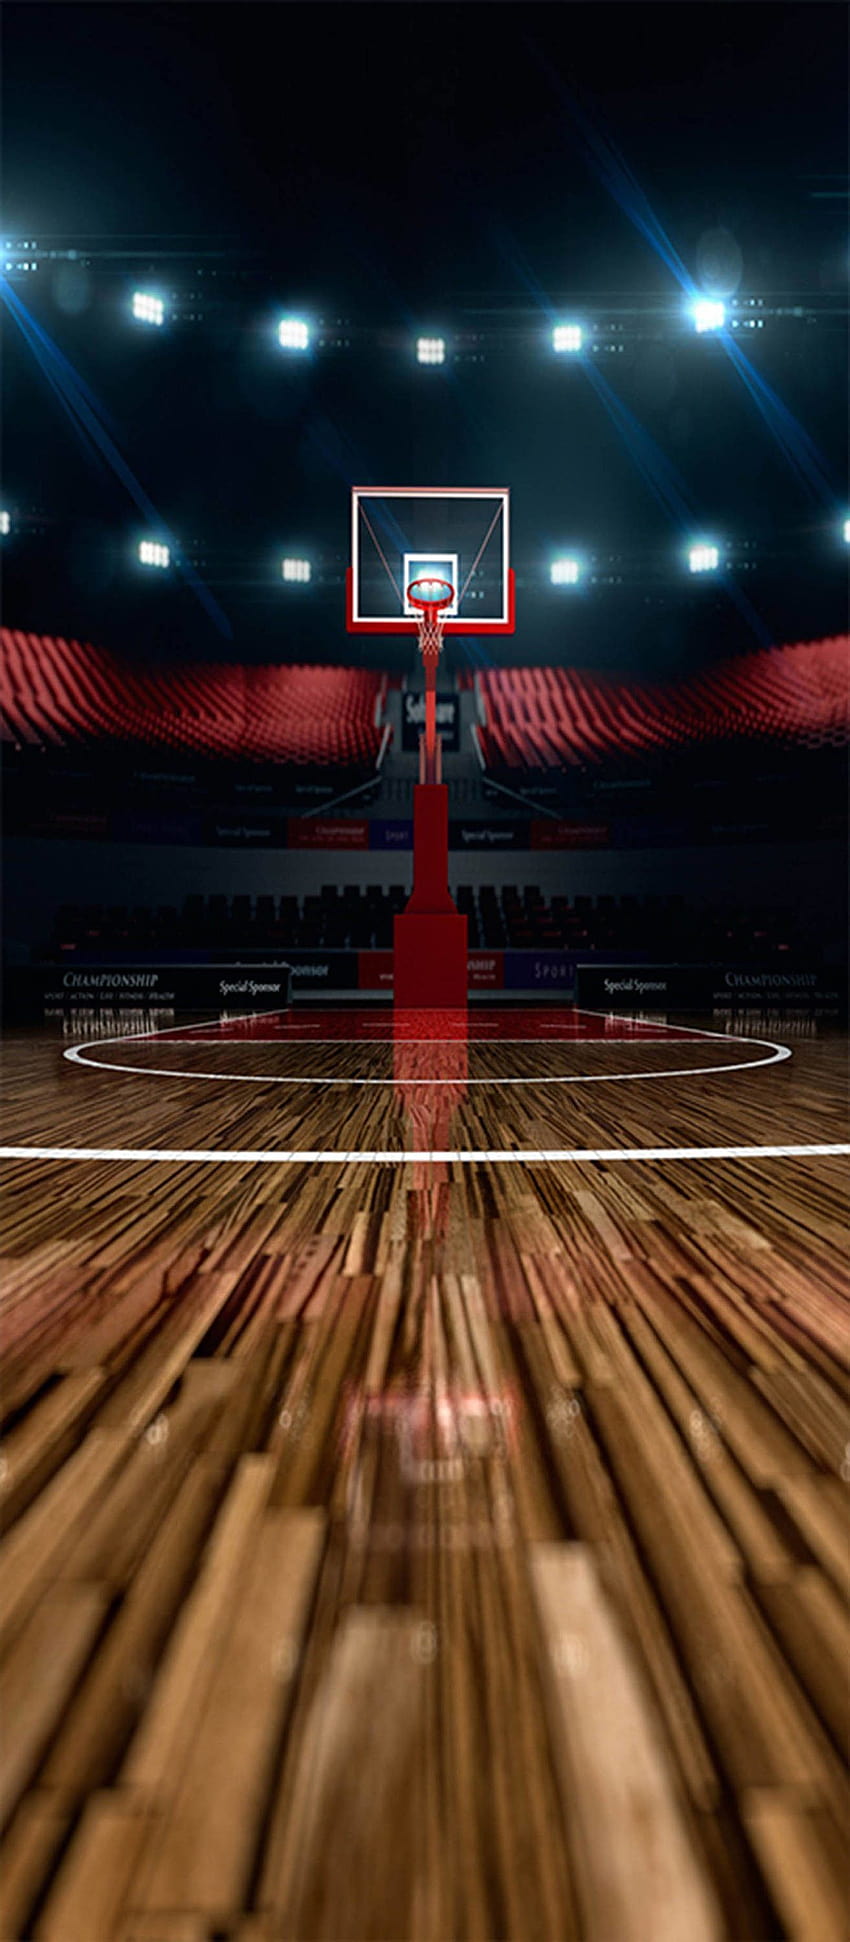 Lapangan Basket, lapangan nba musim panas wallpaper ponsel HD